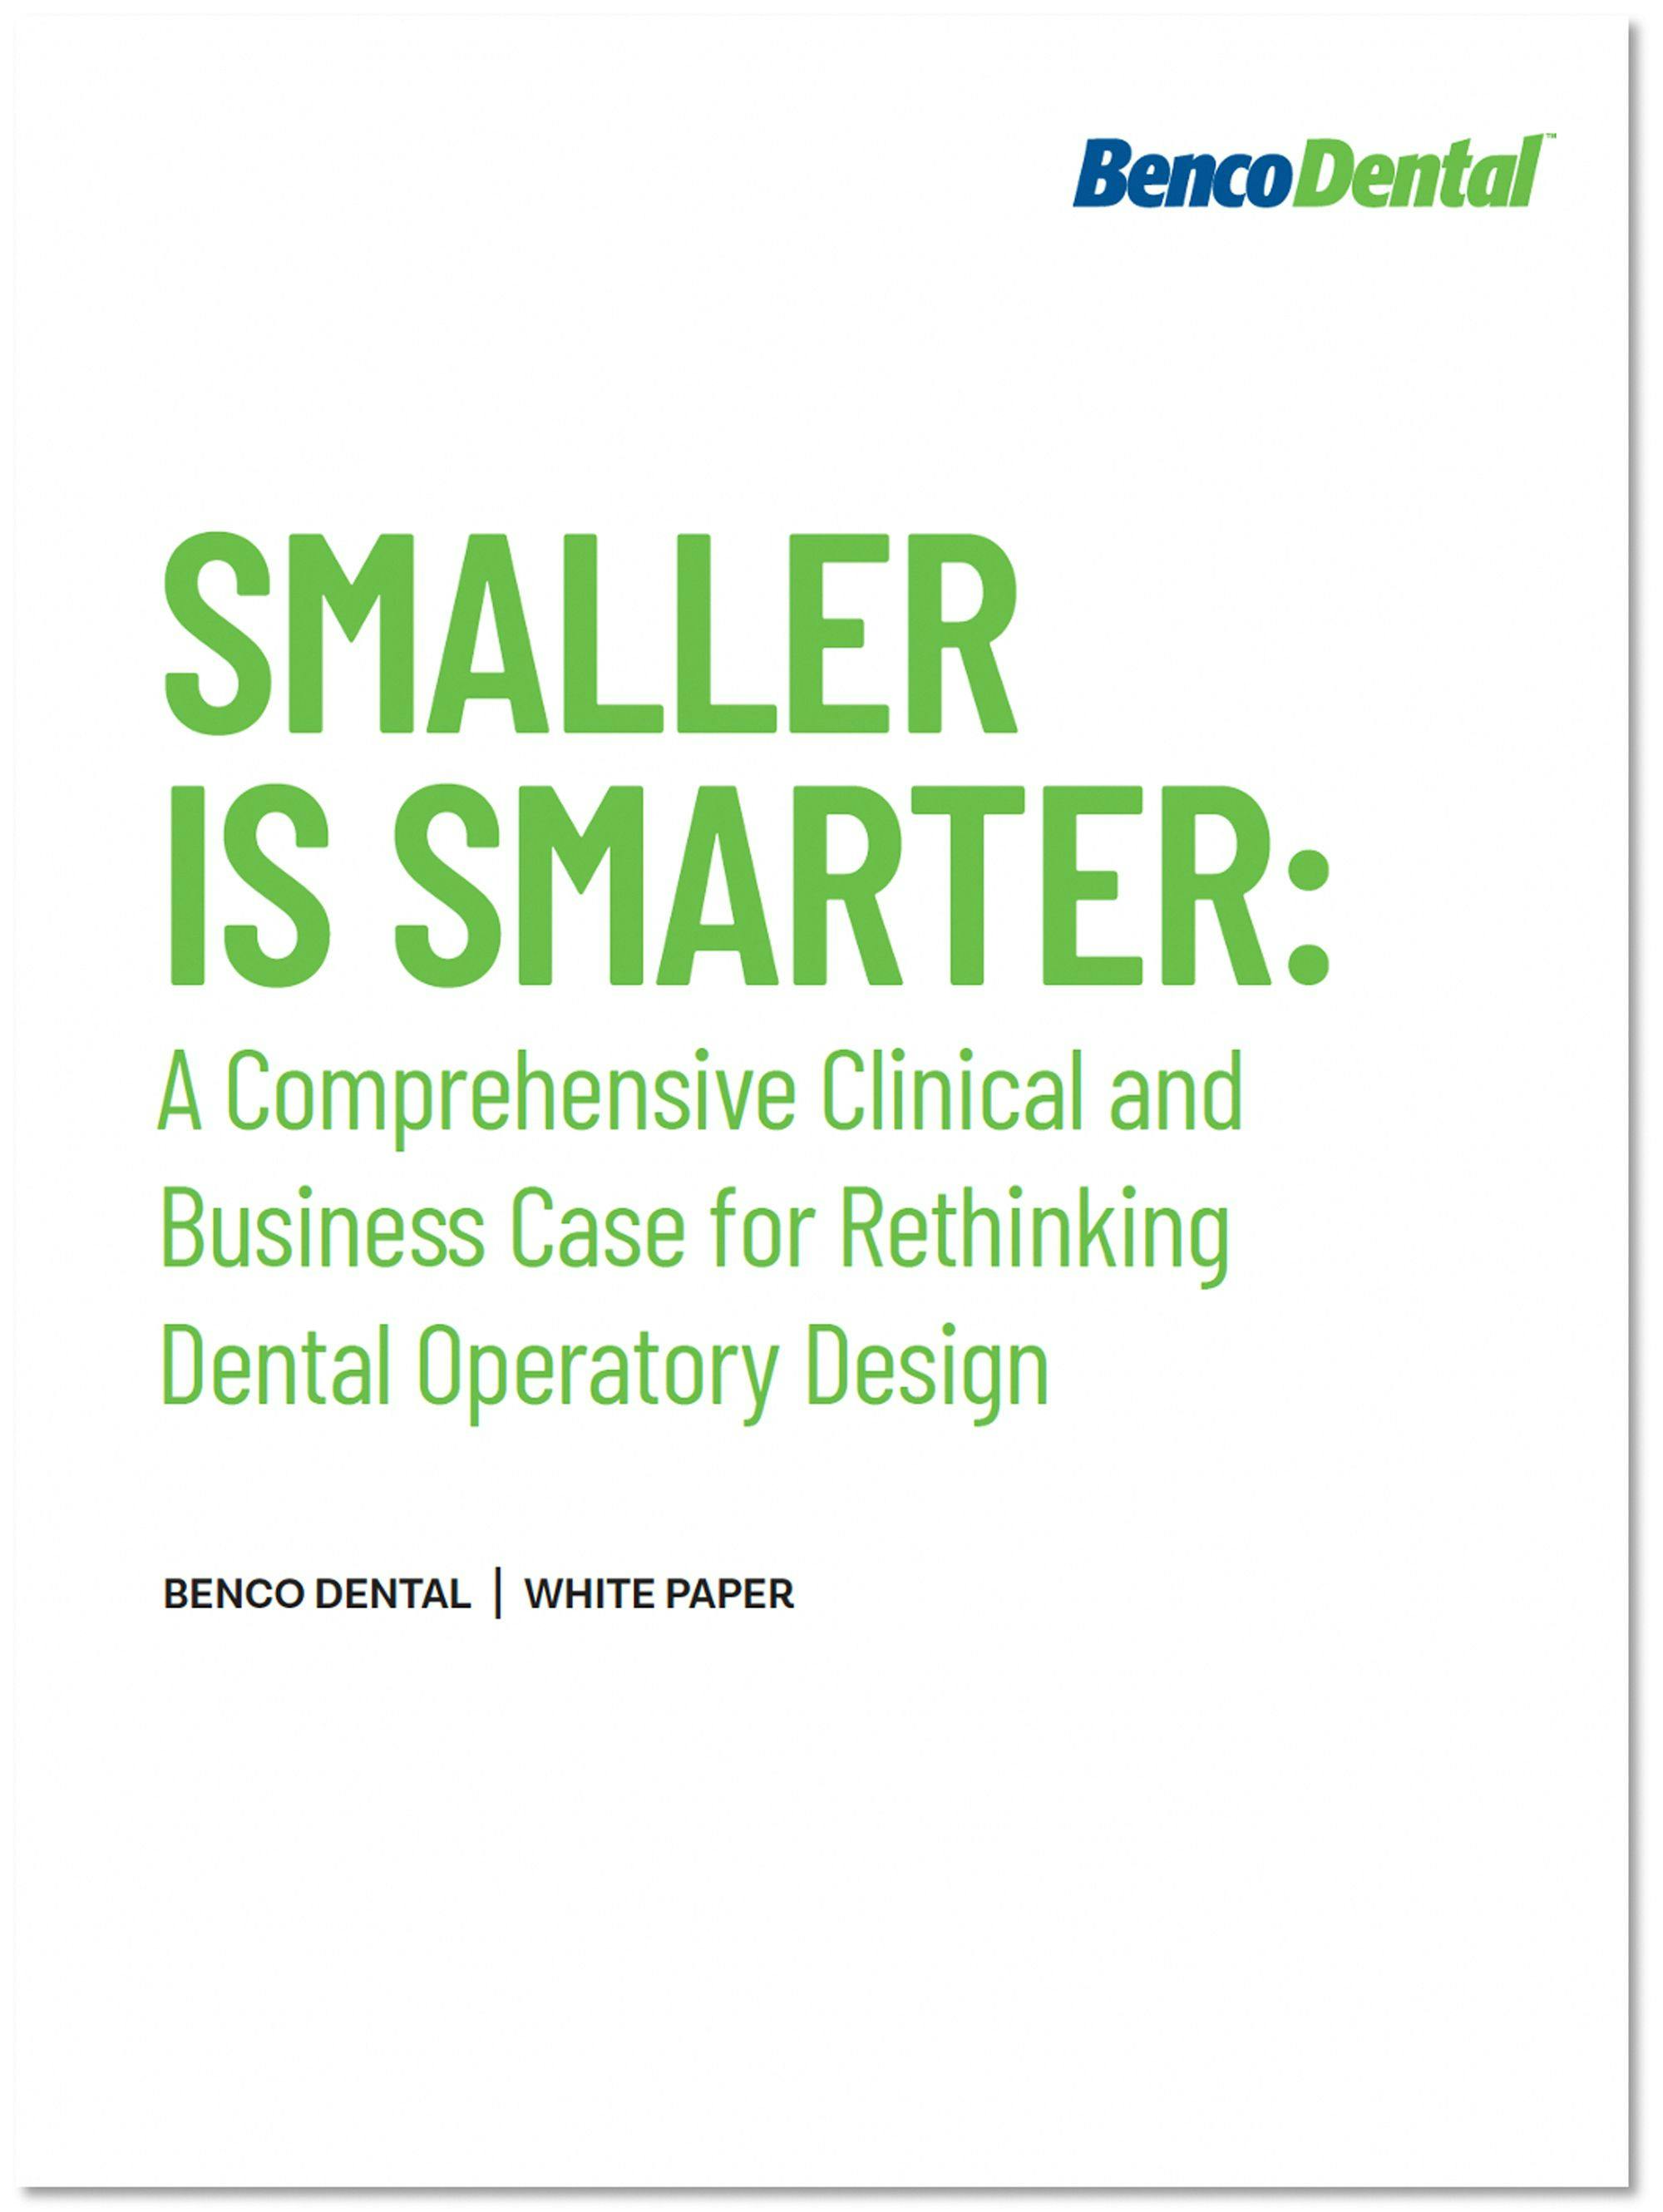 Benco Dental Releases New Smaller Operatory Planning White Paper